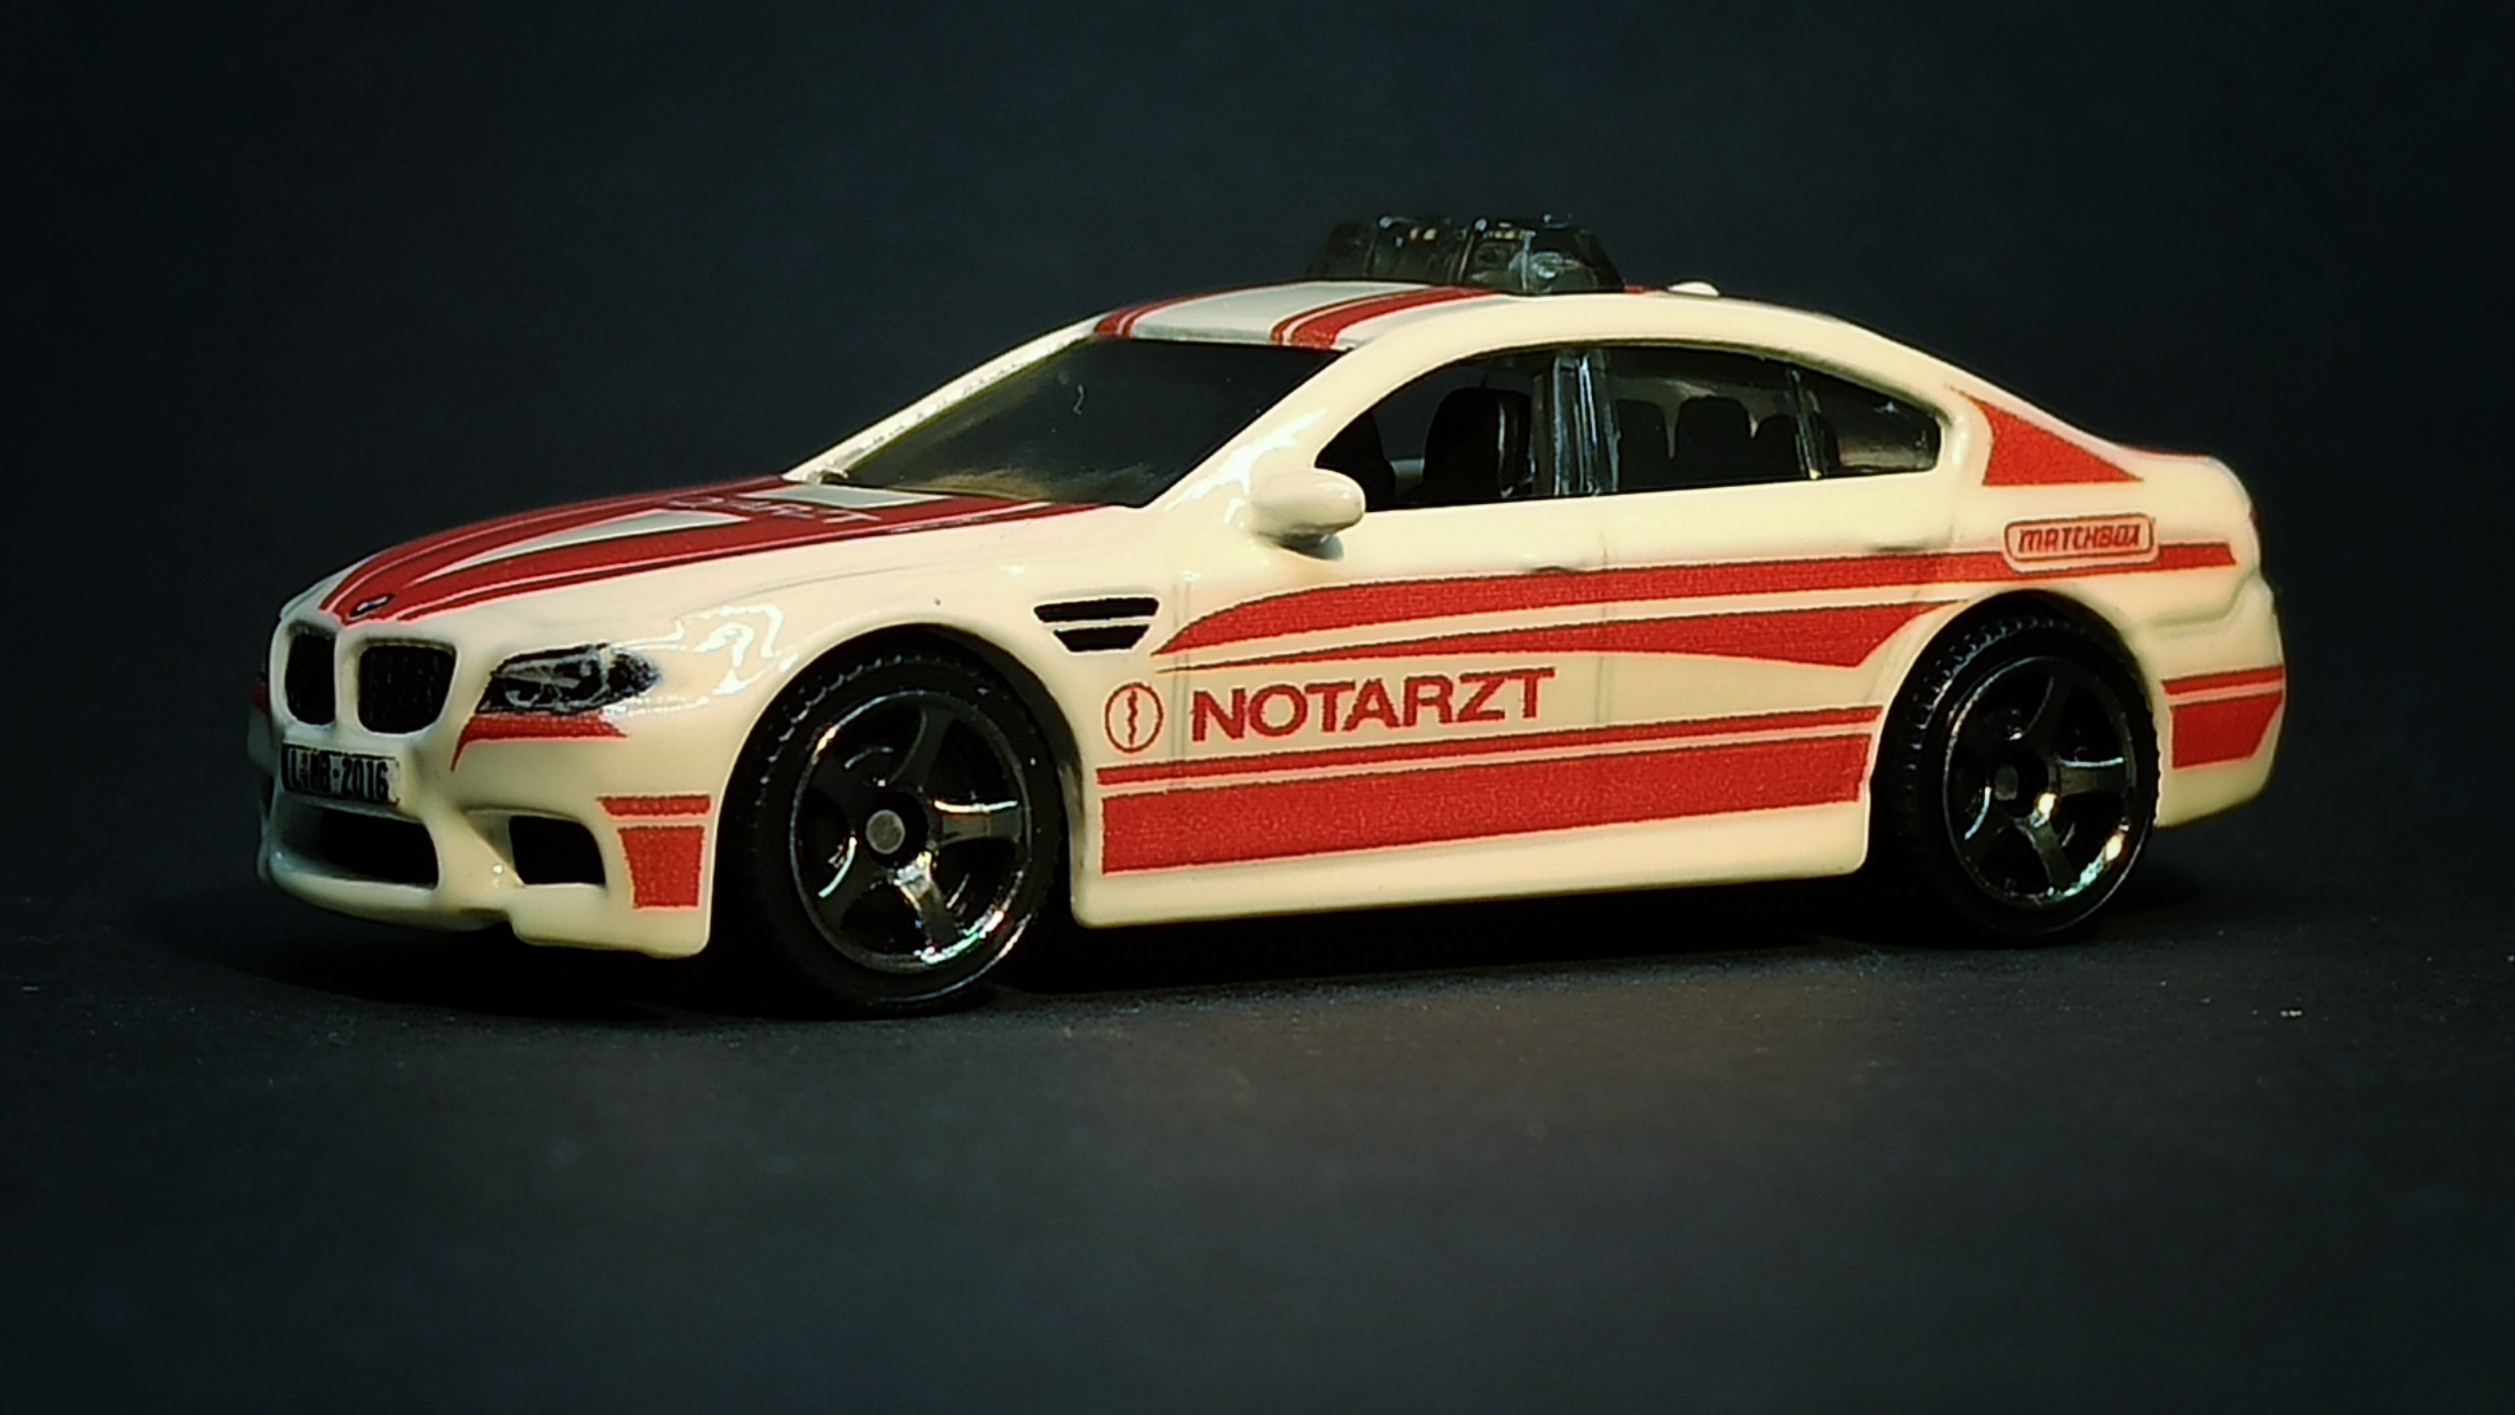 Matchbox BMW M5 Police 2016 Toy Fair "Modell Hobby Spiel" Leipzig white MBX Notarzt side angle